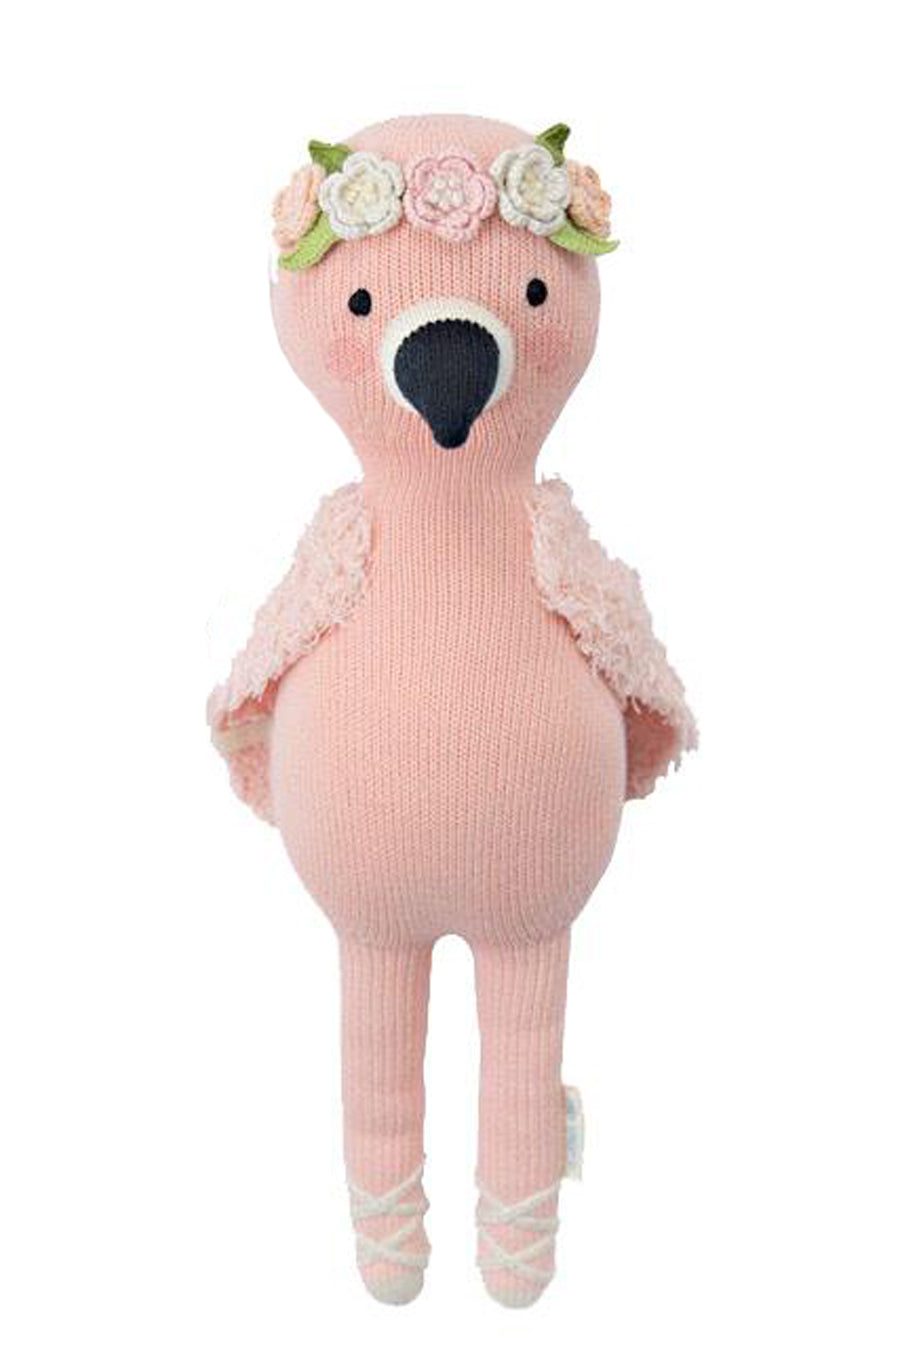 Penelope the Flamingo Knit Doll